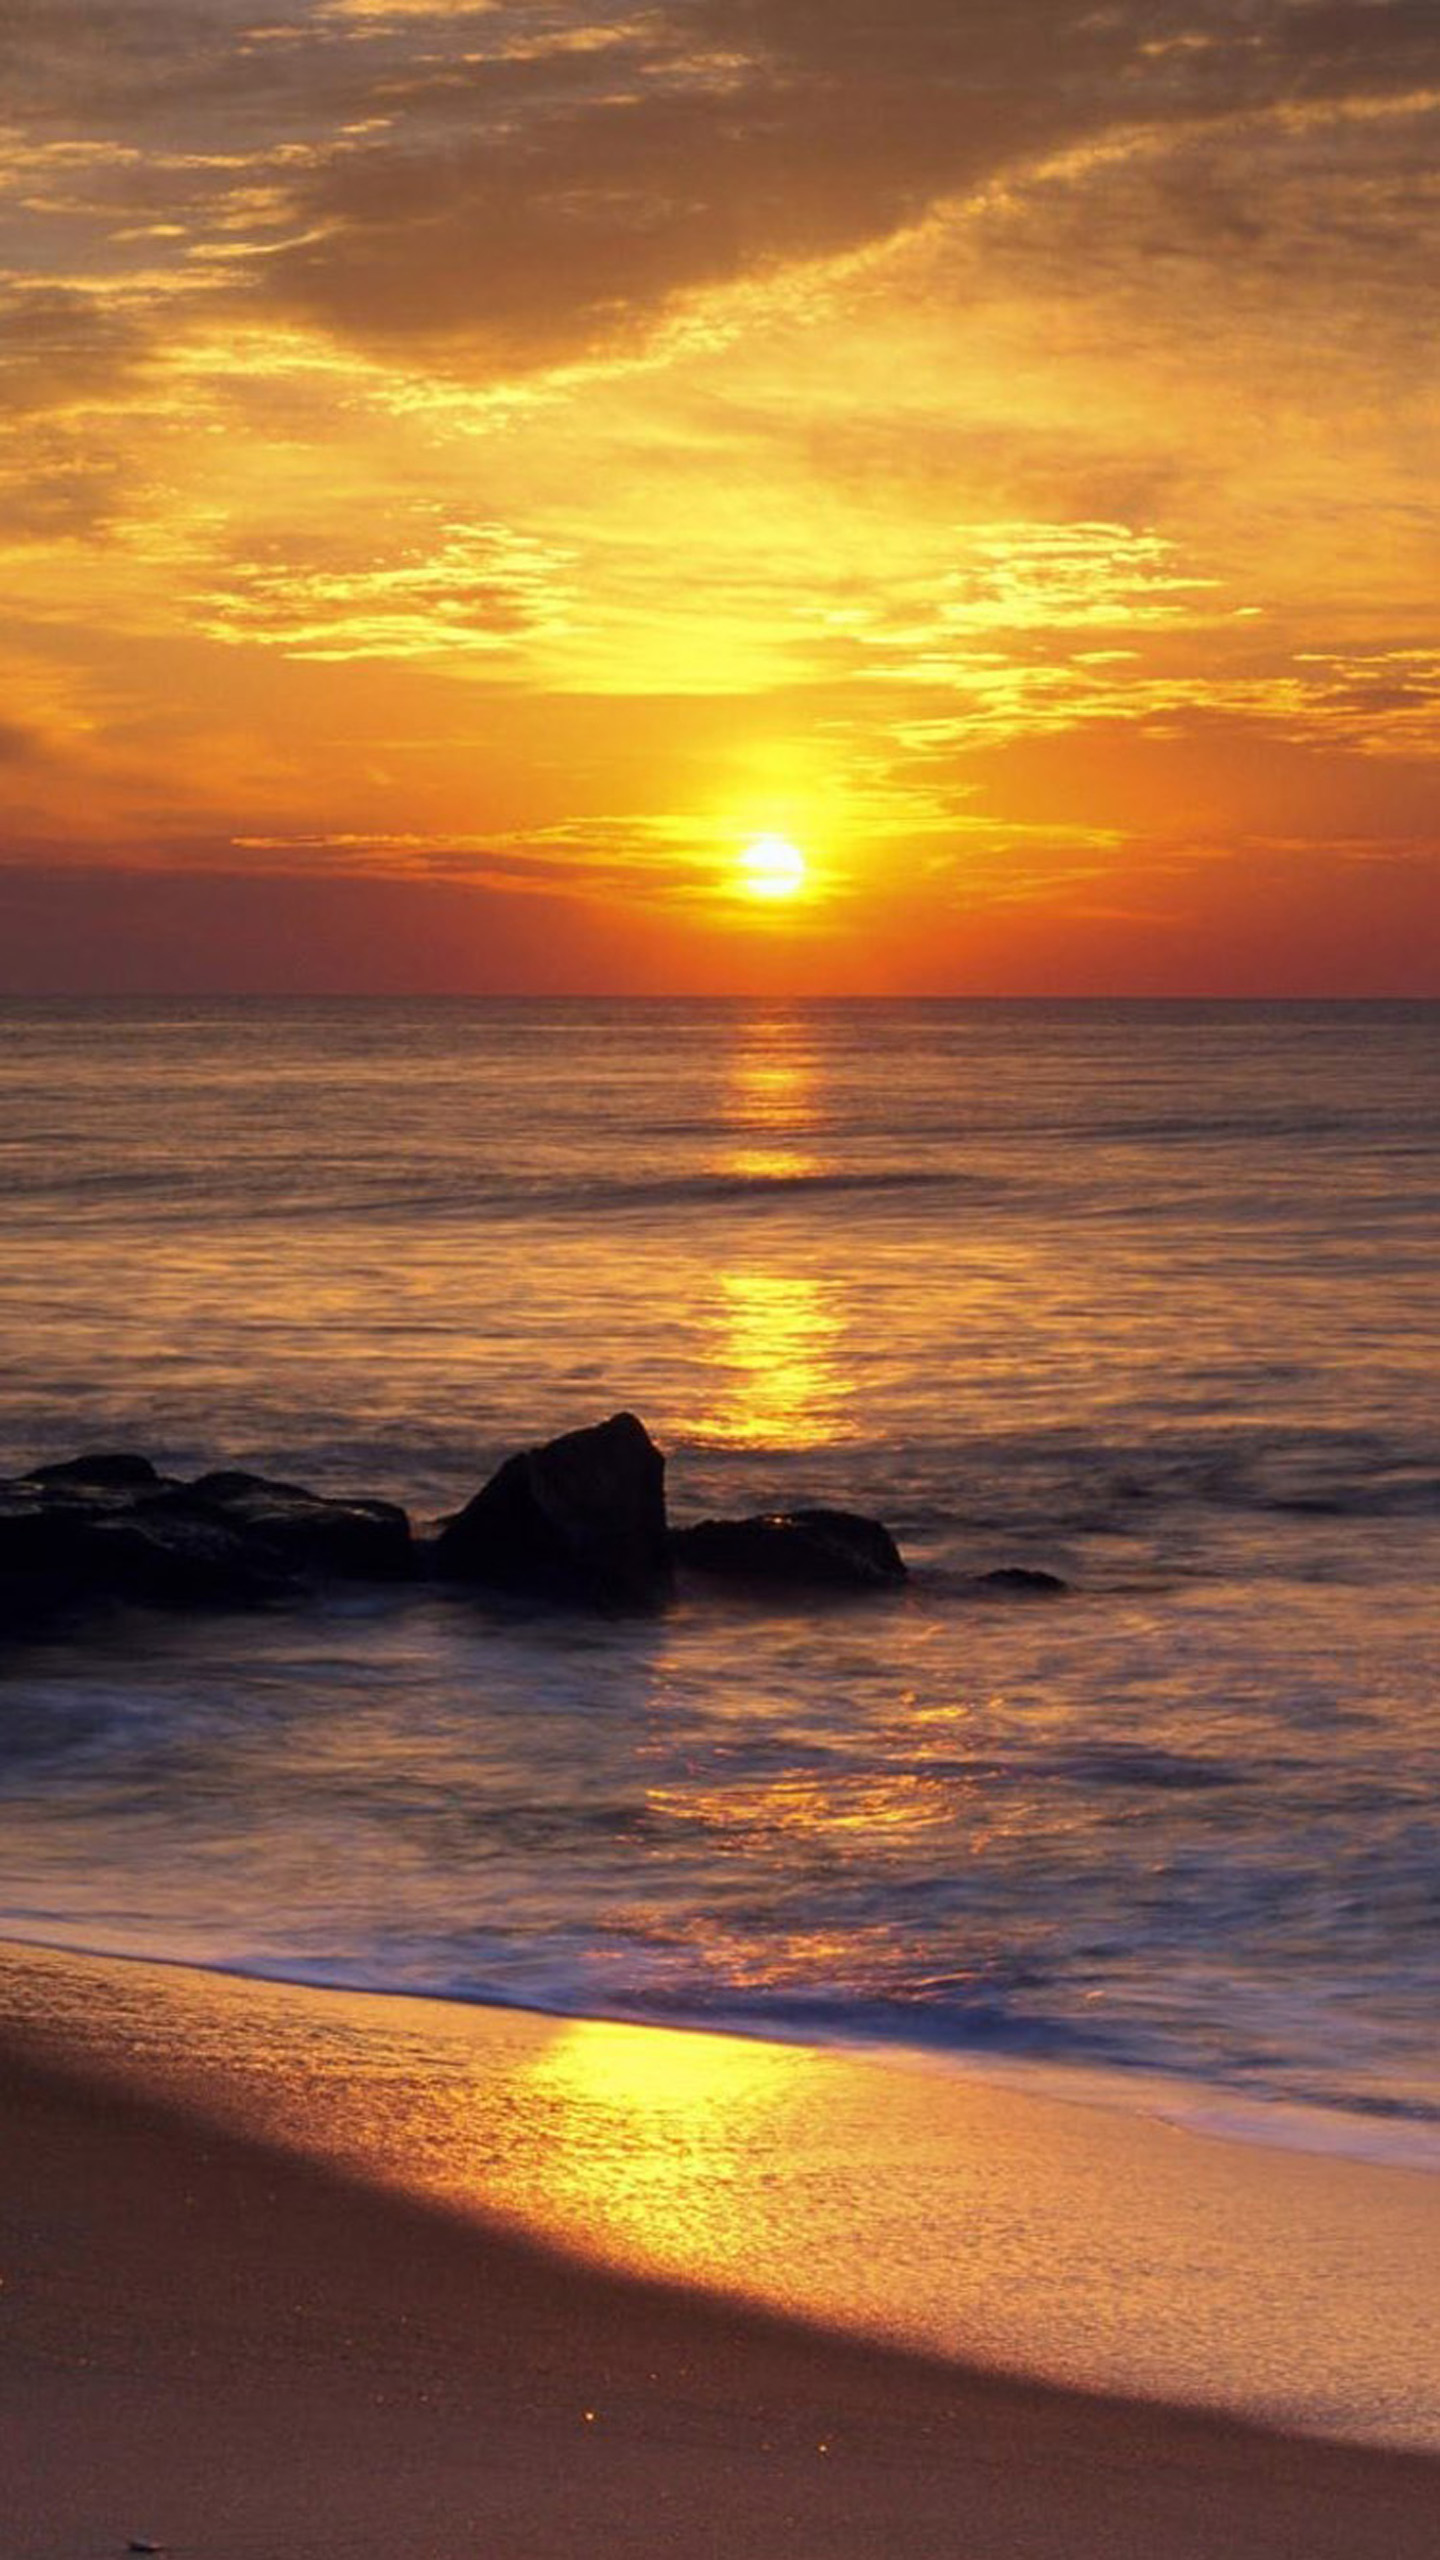 Sunrise Beach Coast Galaxy Note 5 Wallpaper.jpg